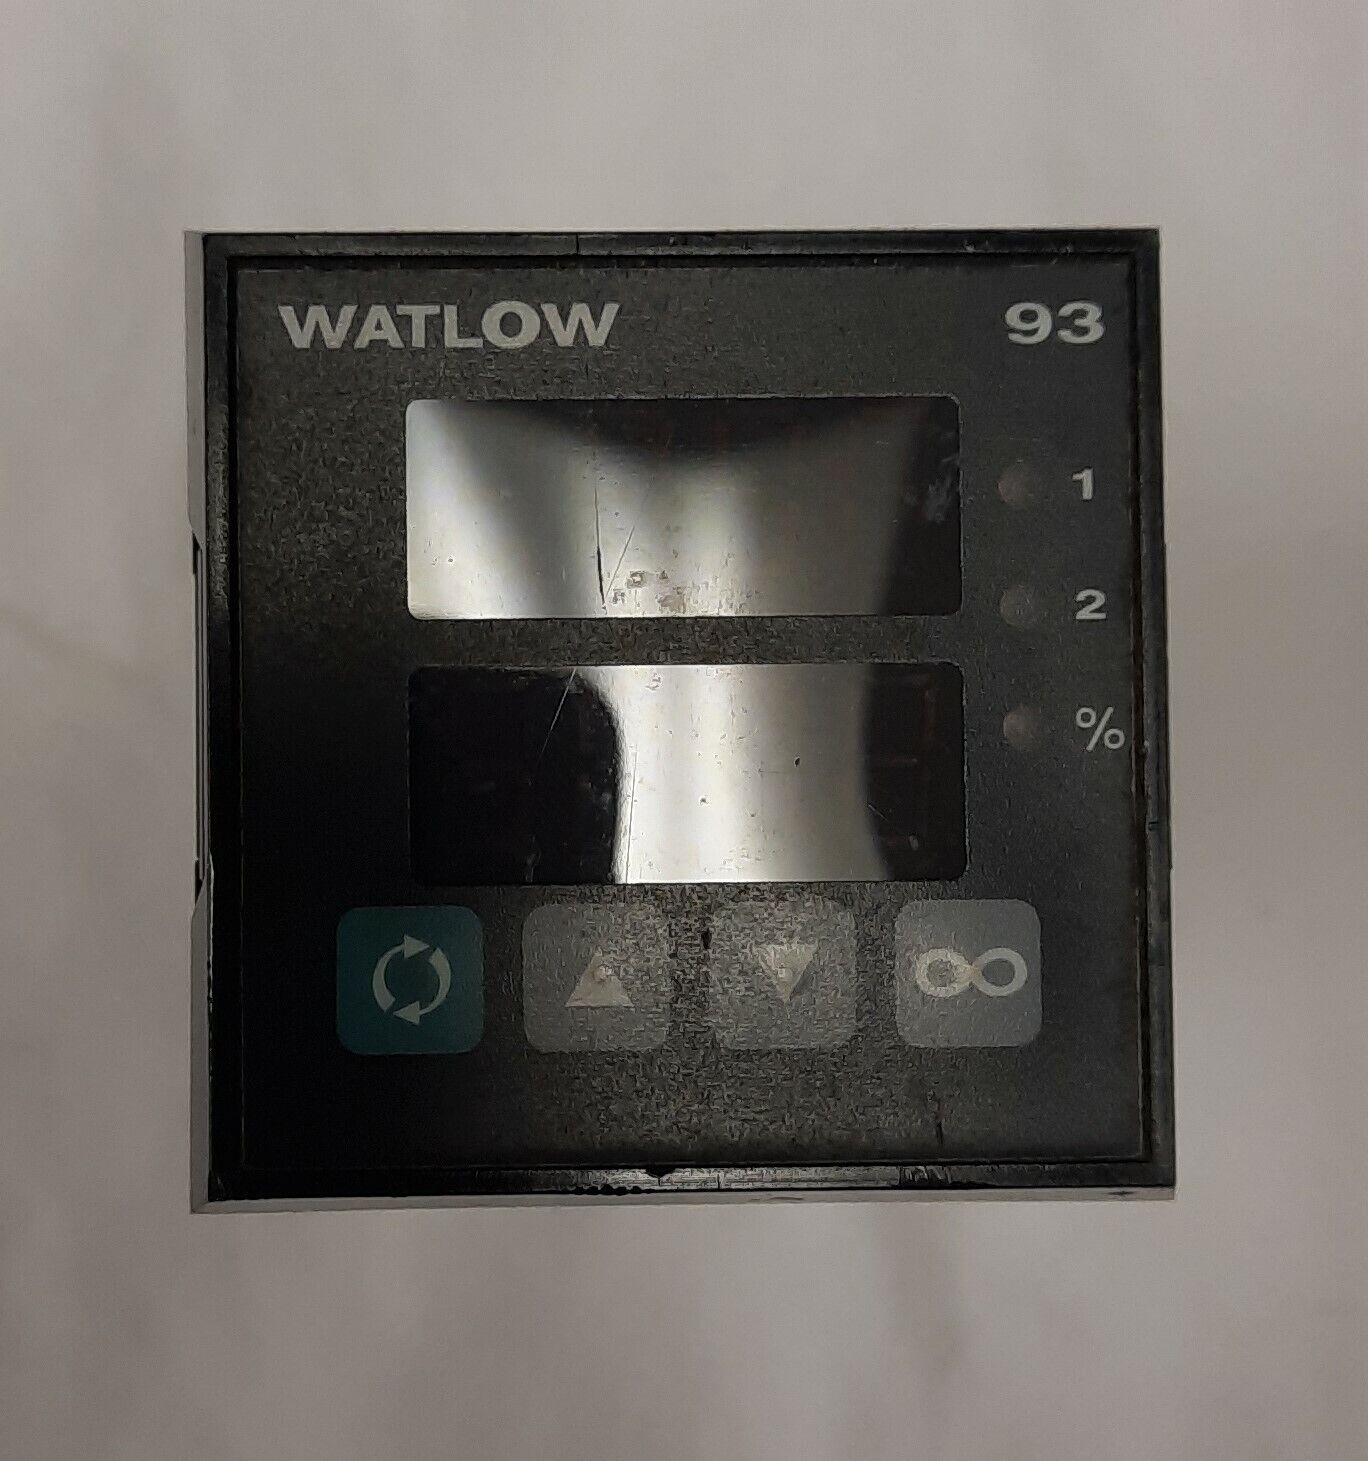 Watlow 93